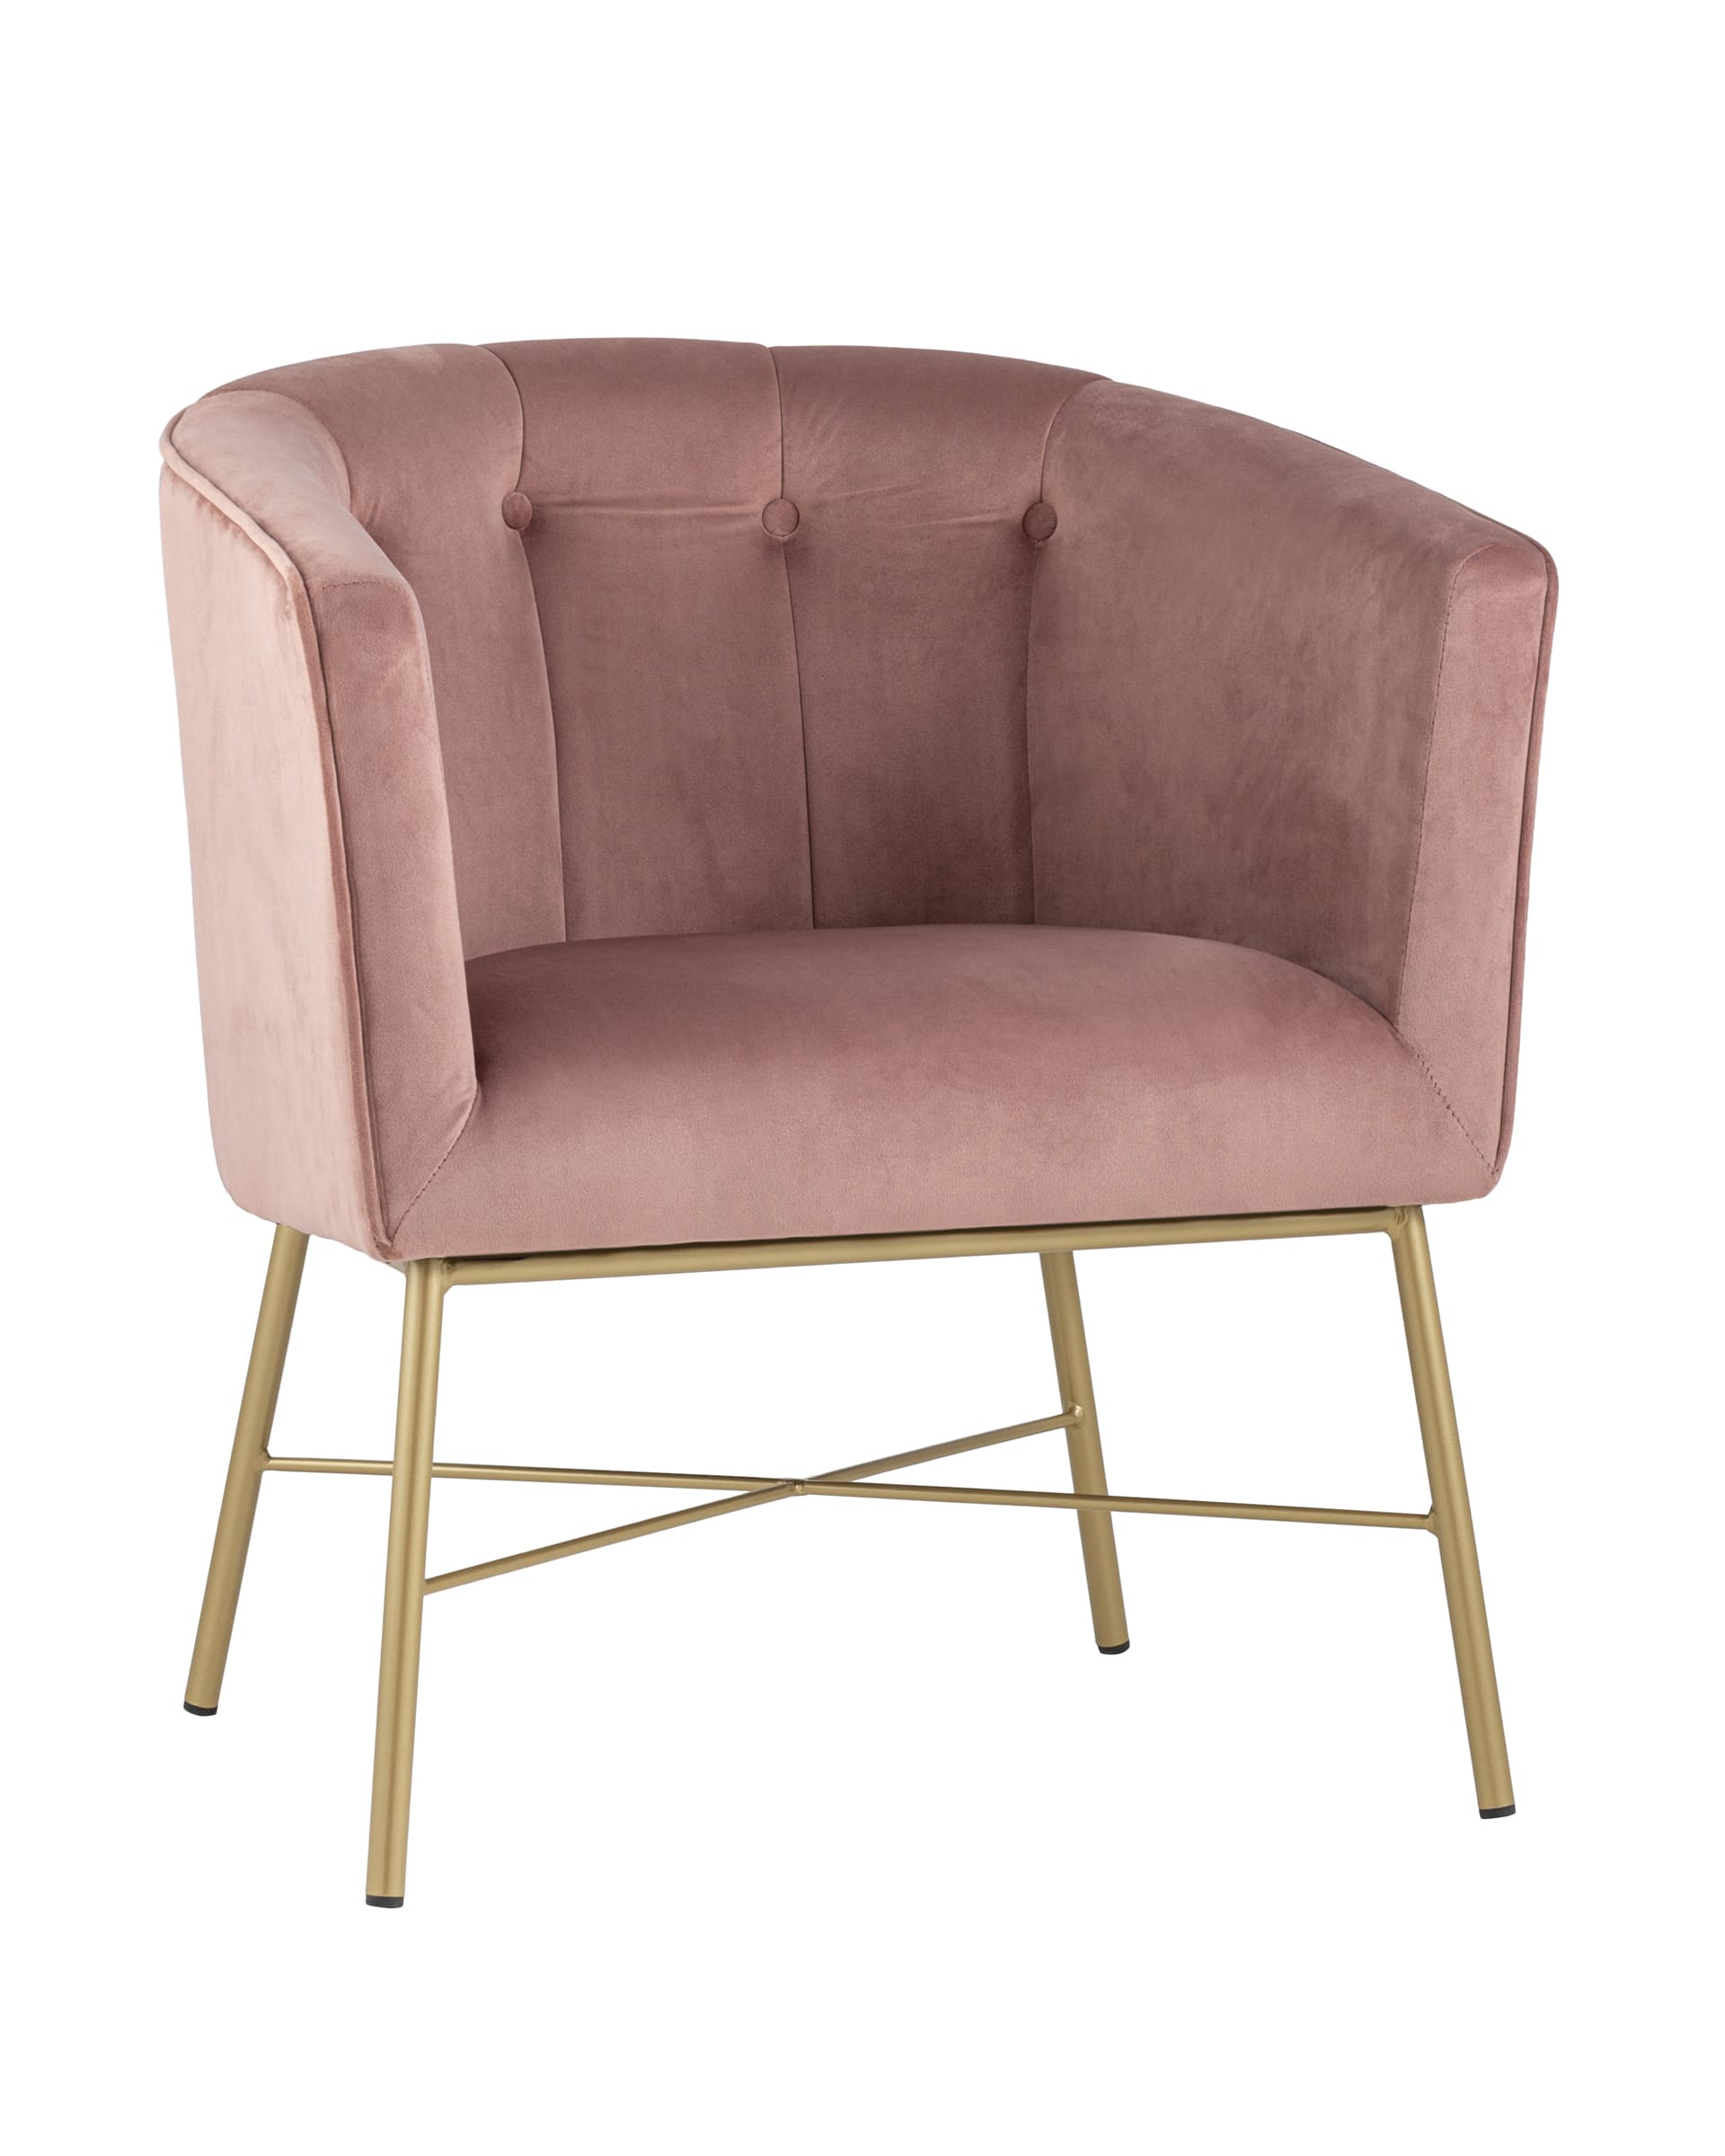 Кресло шале (stoolgroup) розовый 67x75x62 см.